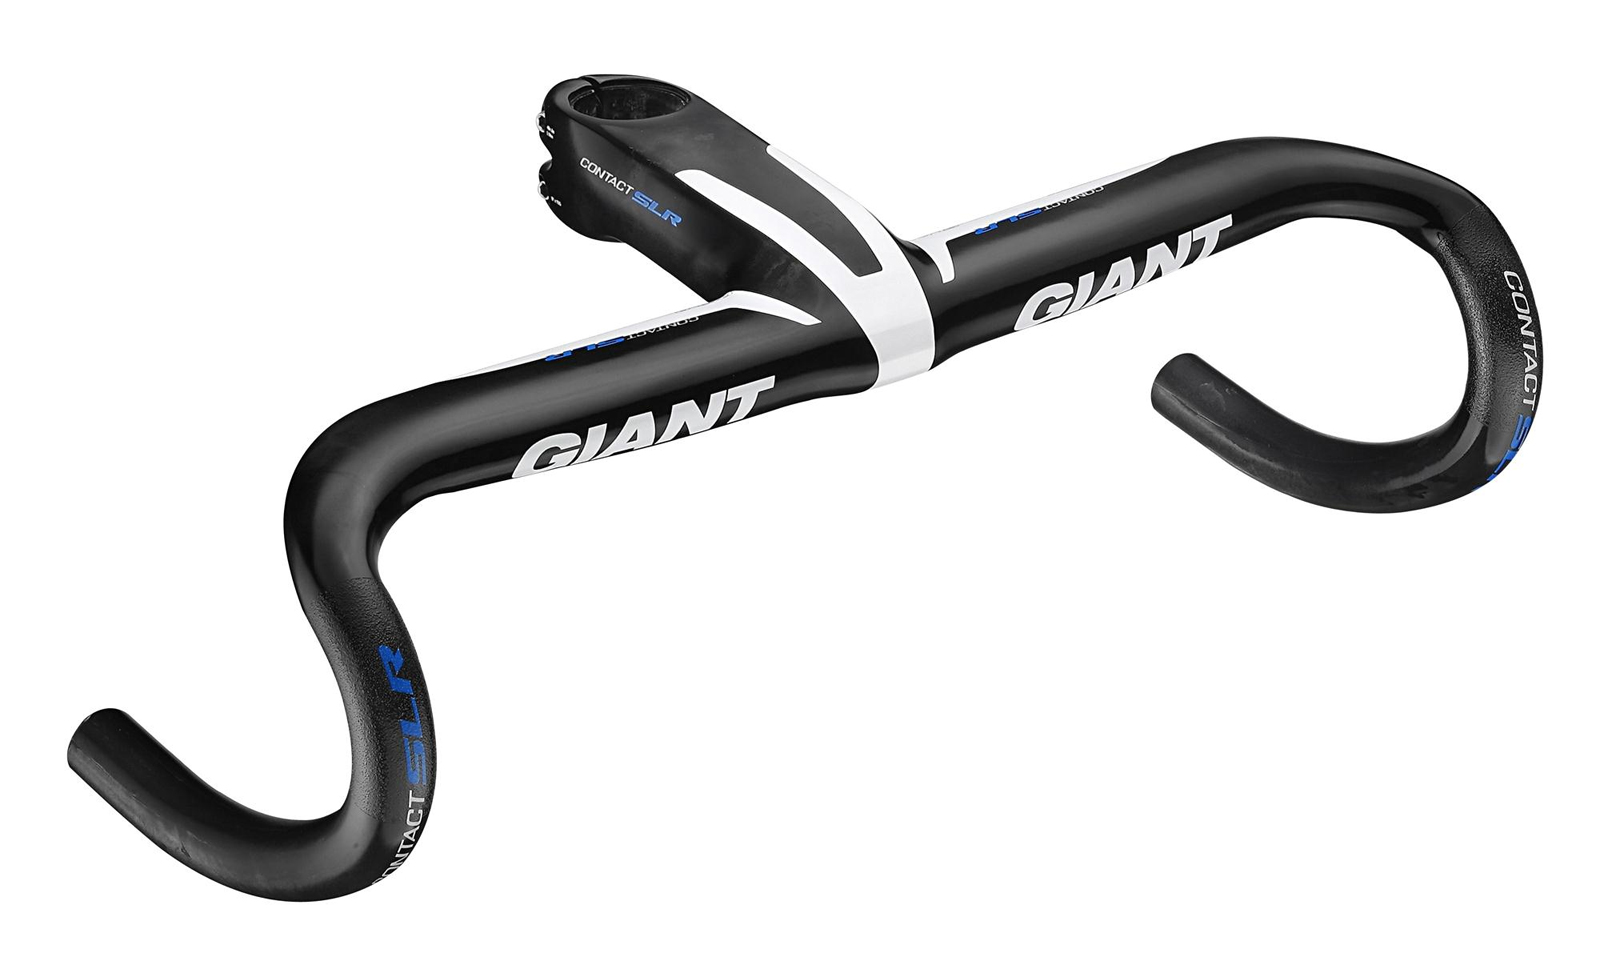 Giant Contact SLR Aero Integrated Handlebar - Planet Bike East ...